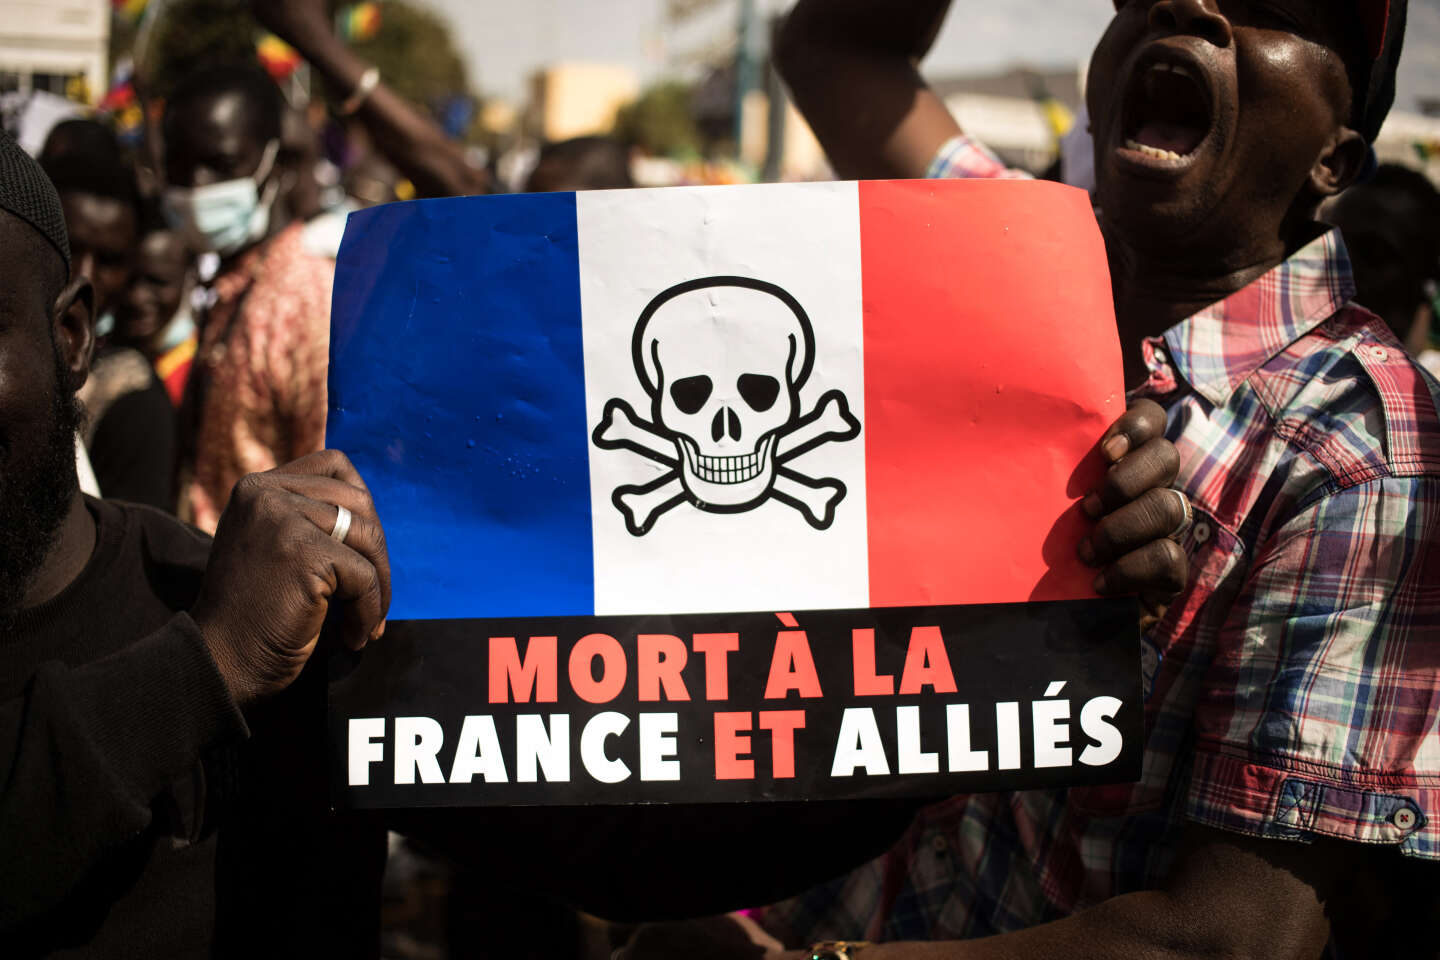 De Dakar à Djibouti, radioscopie de la relation Afrique-France